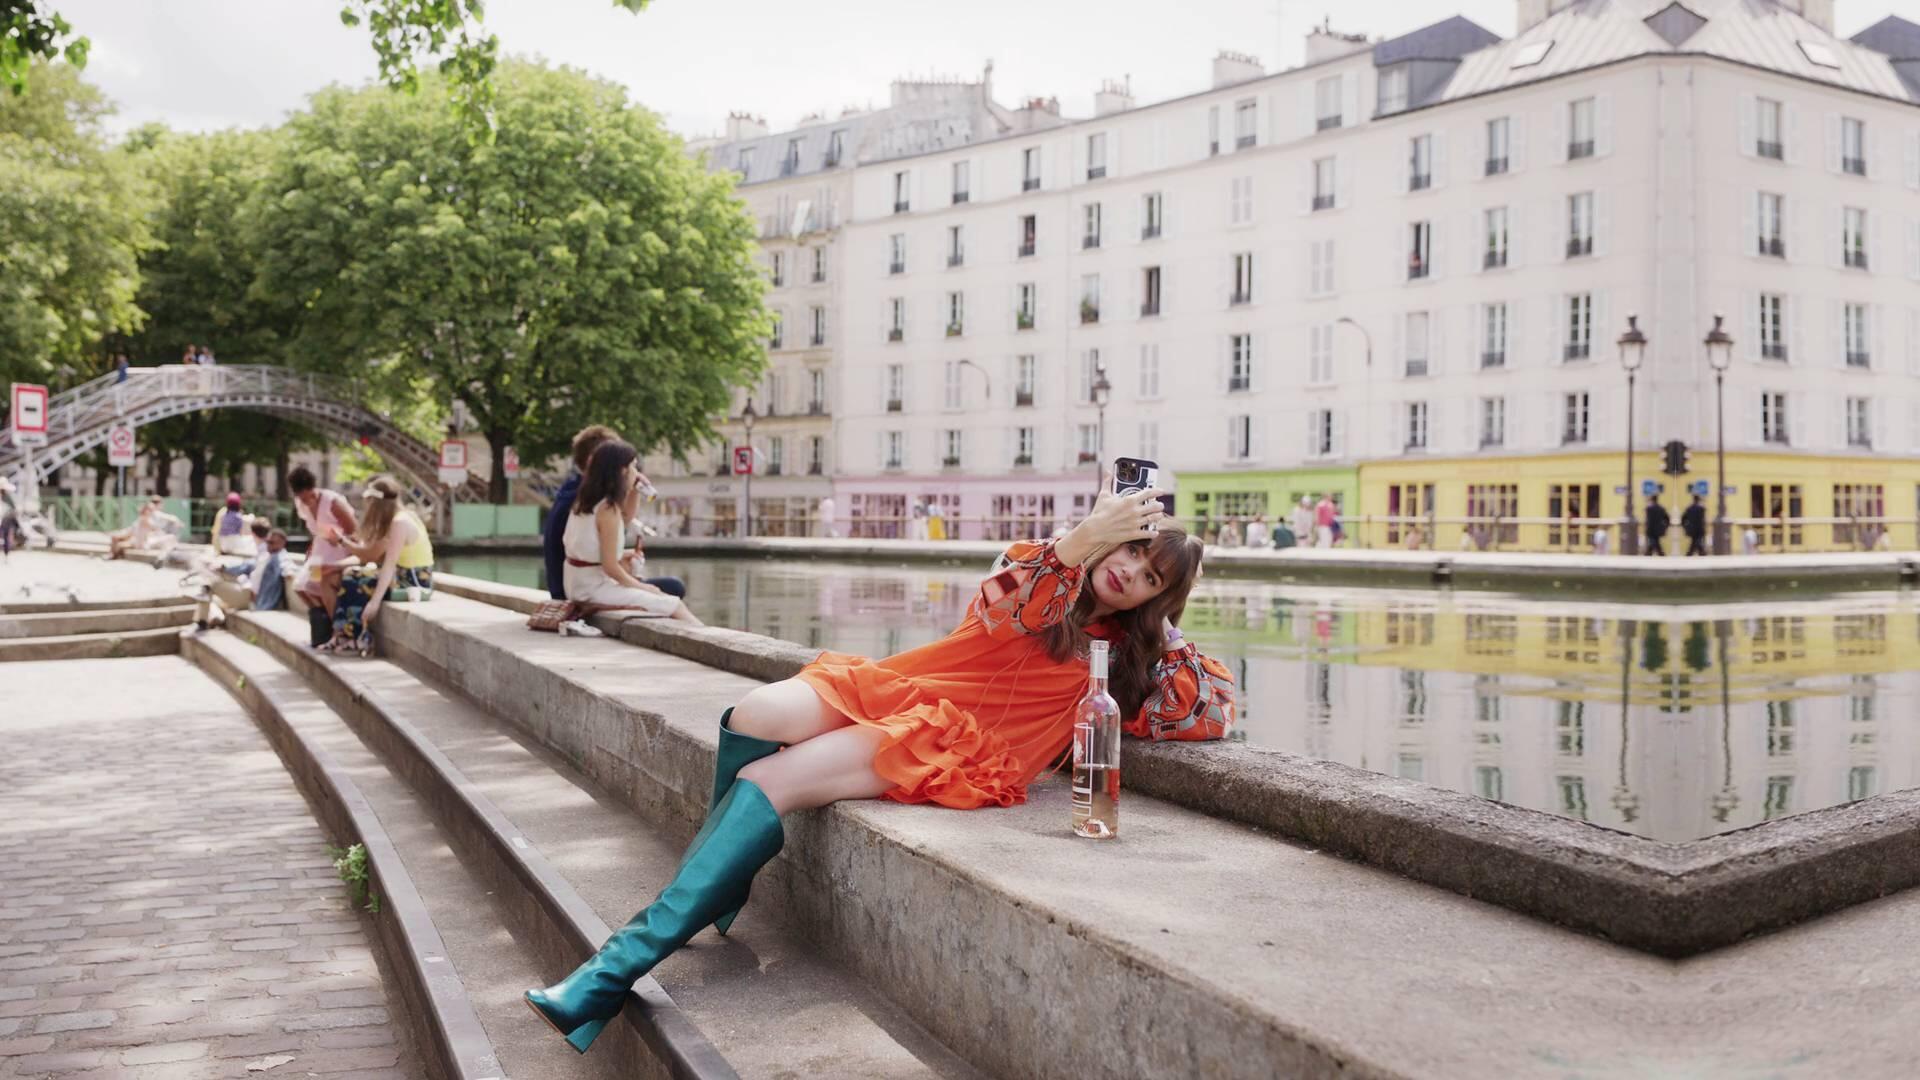 Lily Collins – Emily in Paris | Season 3 Episode 4